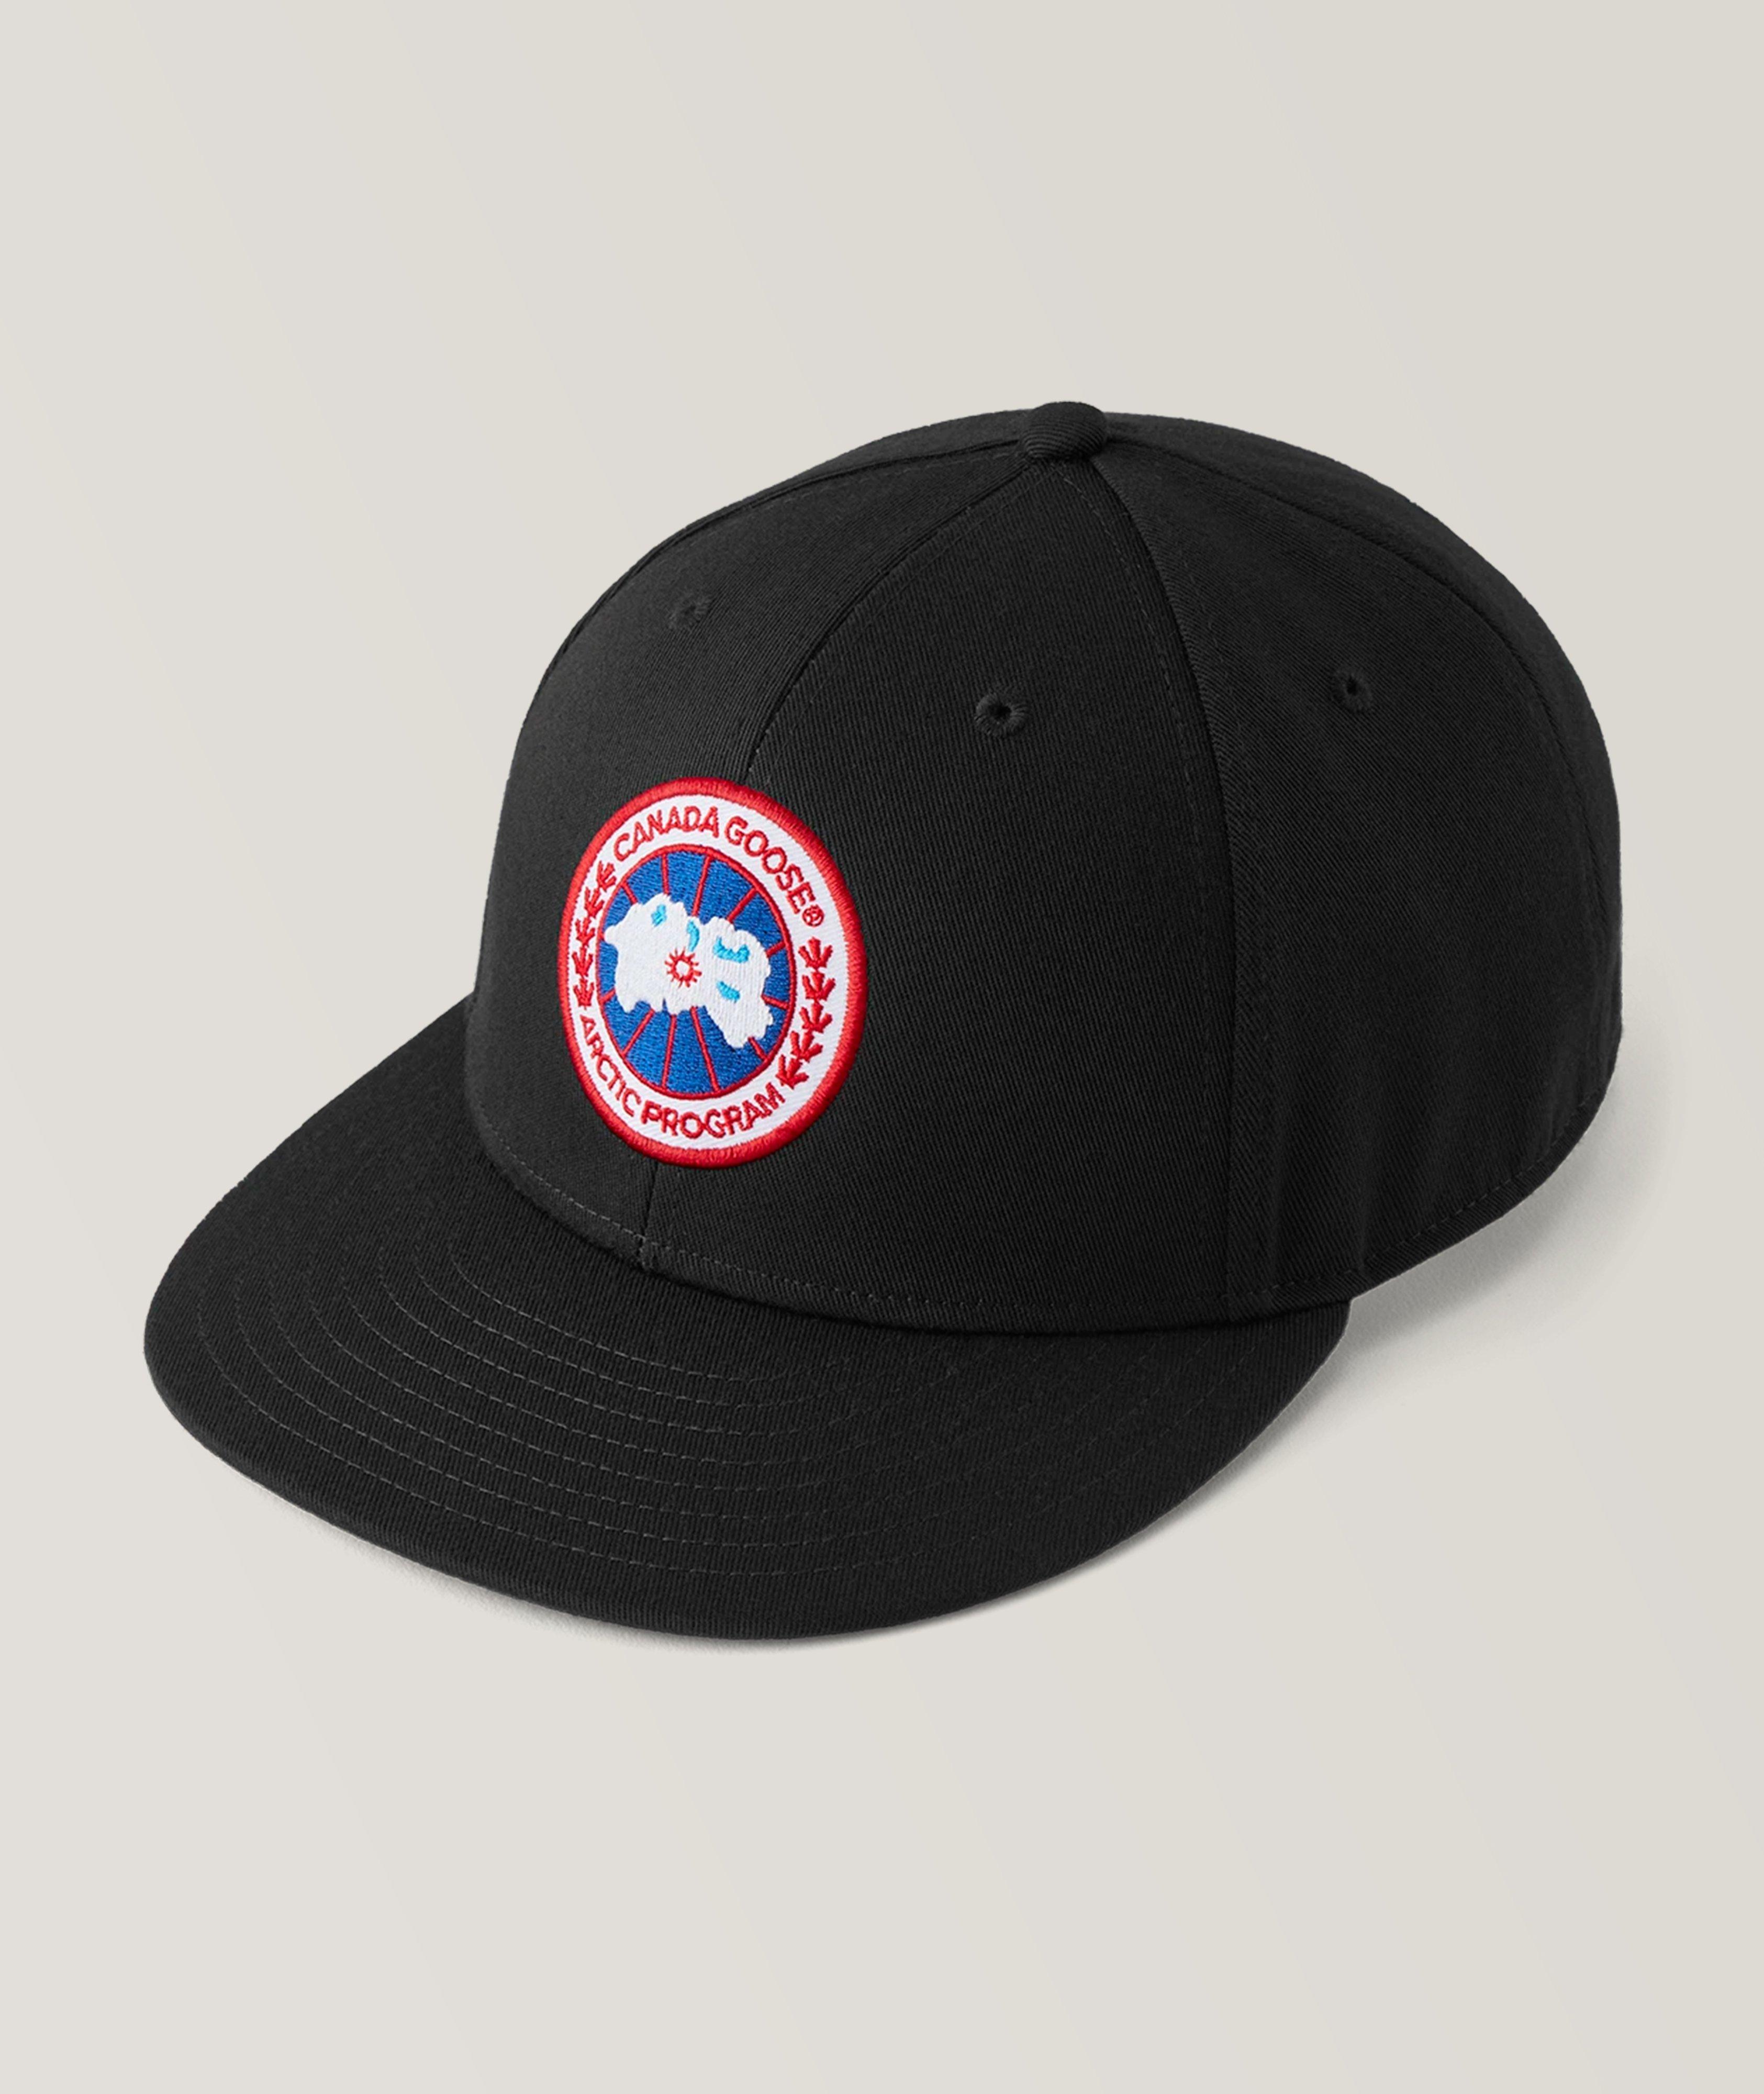 Black Baseball cap Canada Goose - Vitkac Canada